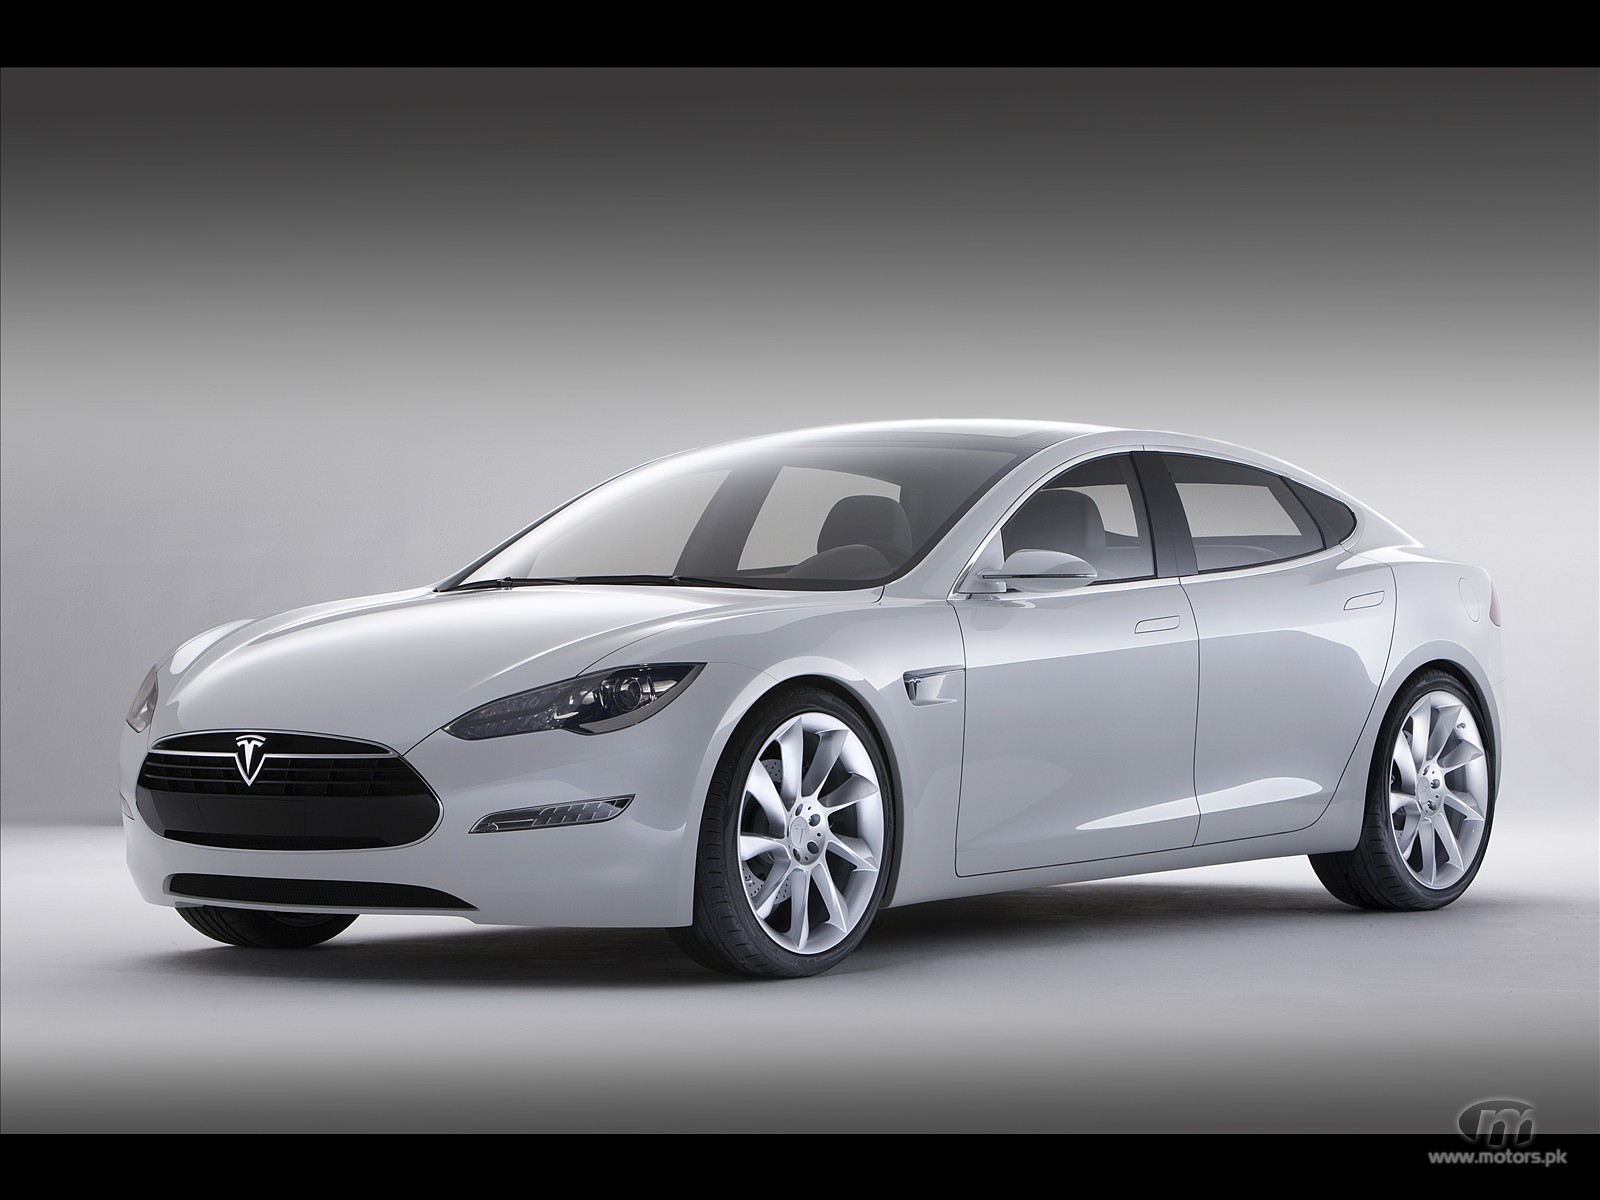 2010-Tesla-Model